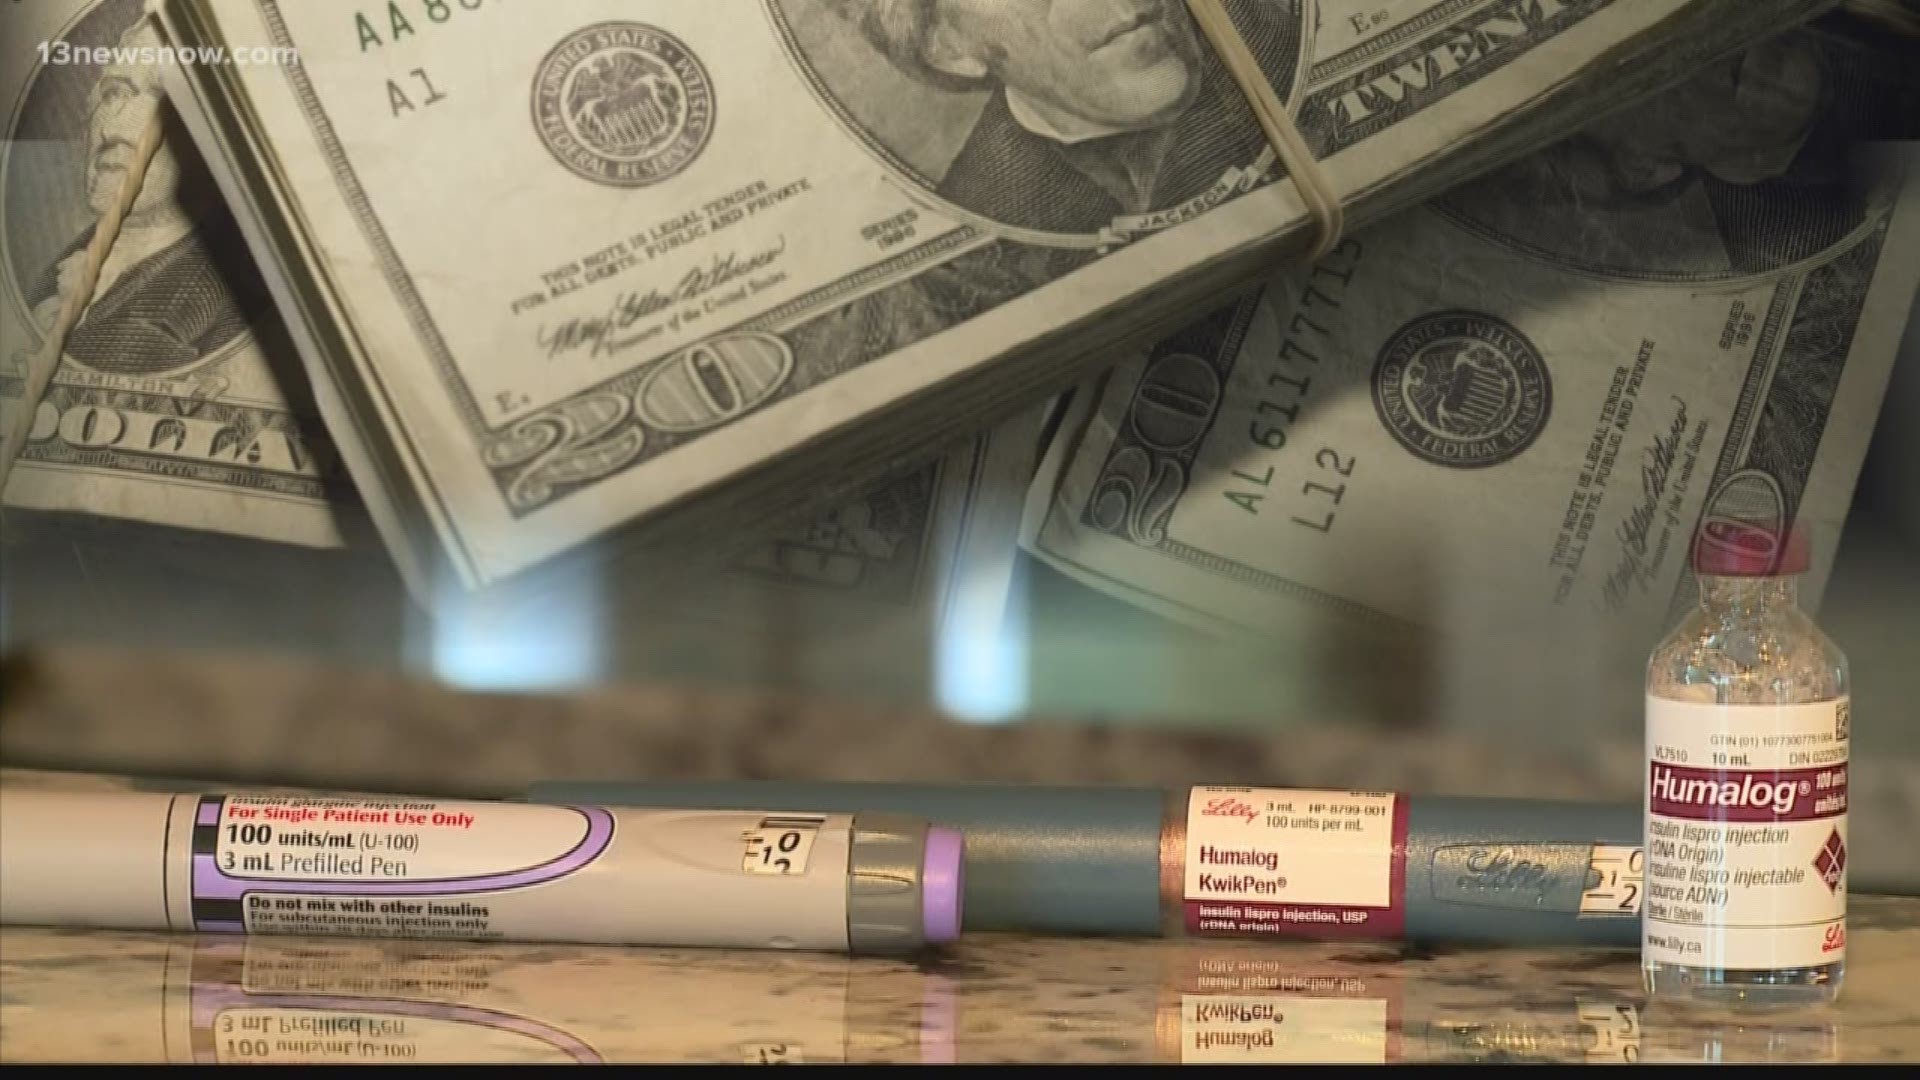 Senators are questioning the skyrocketing costs of a life-saving medication, insulin.